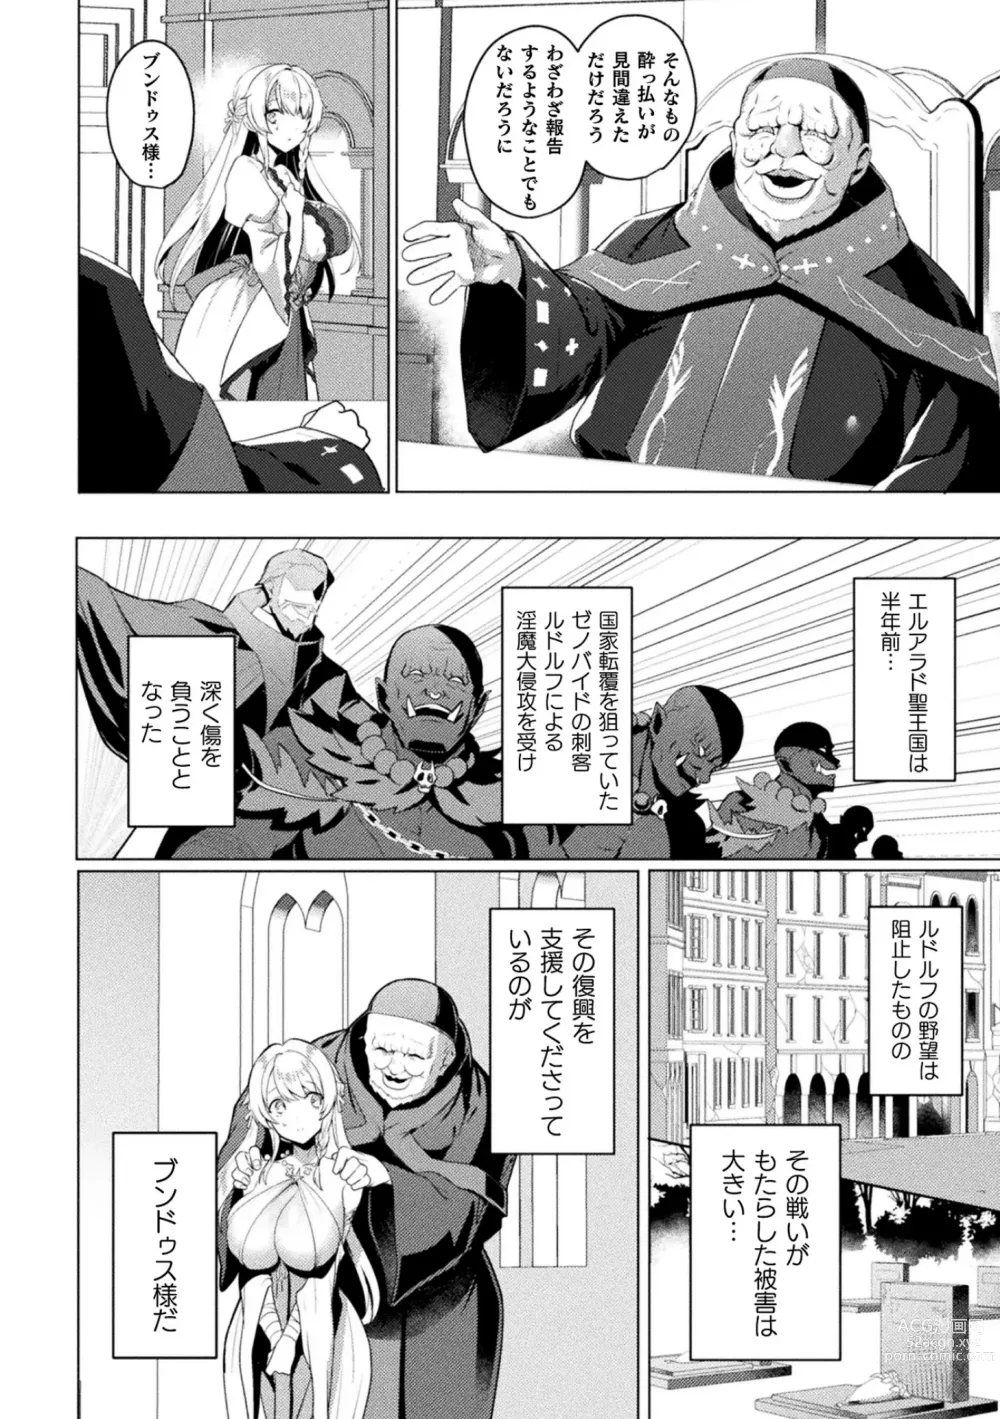 Page 8 of manga Kukkoro Heroines Vol. 31